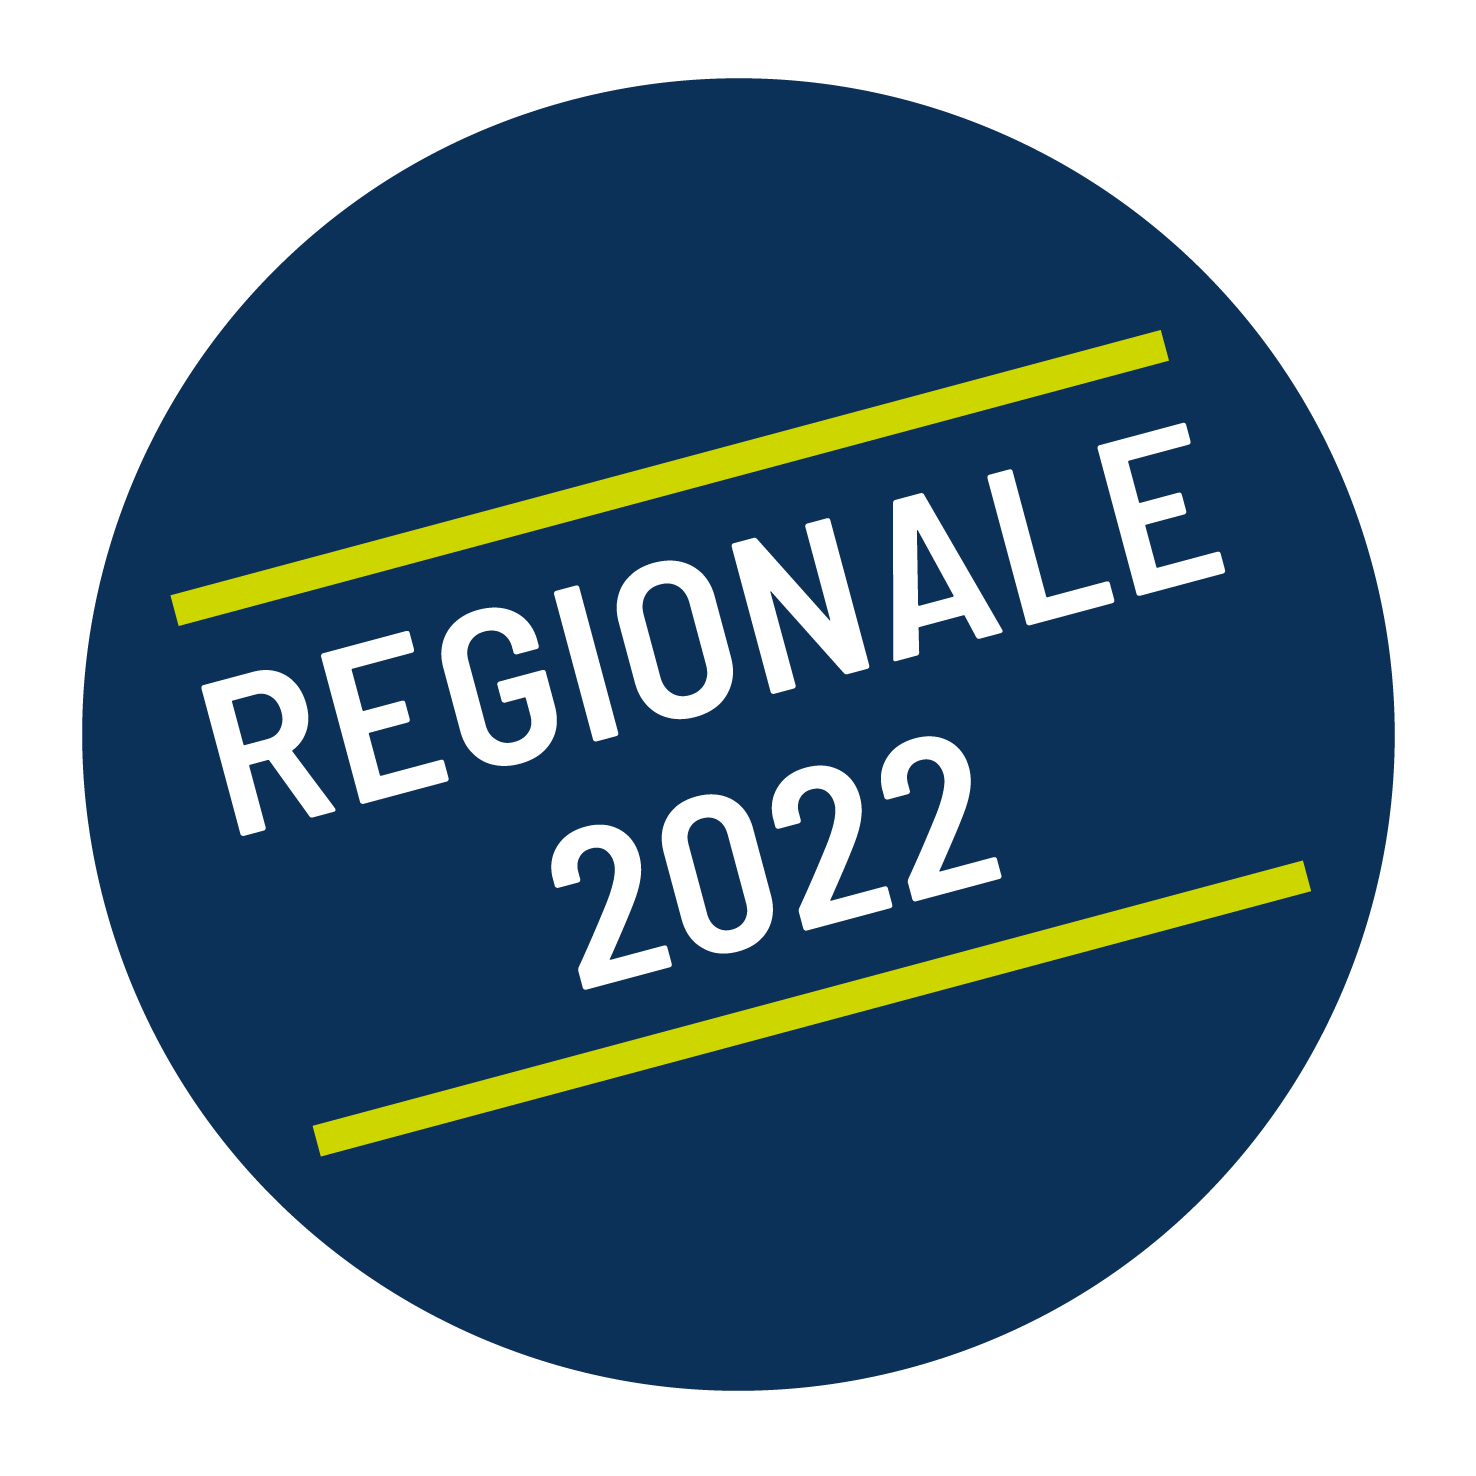 Label Regionale 2022 sRGB